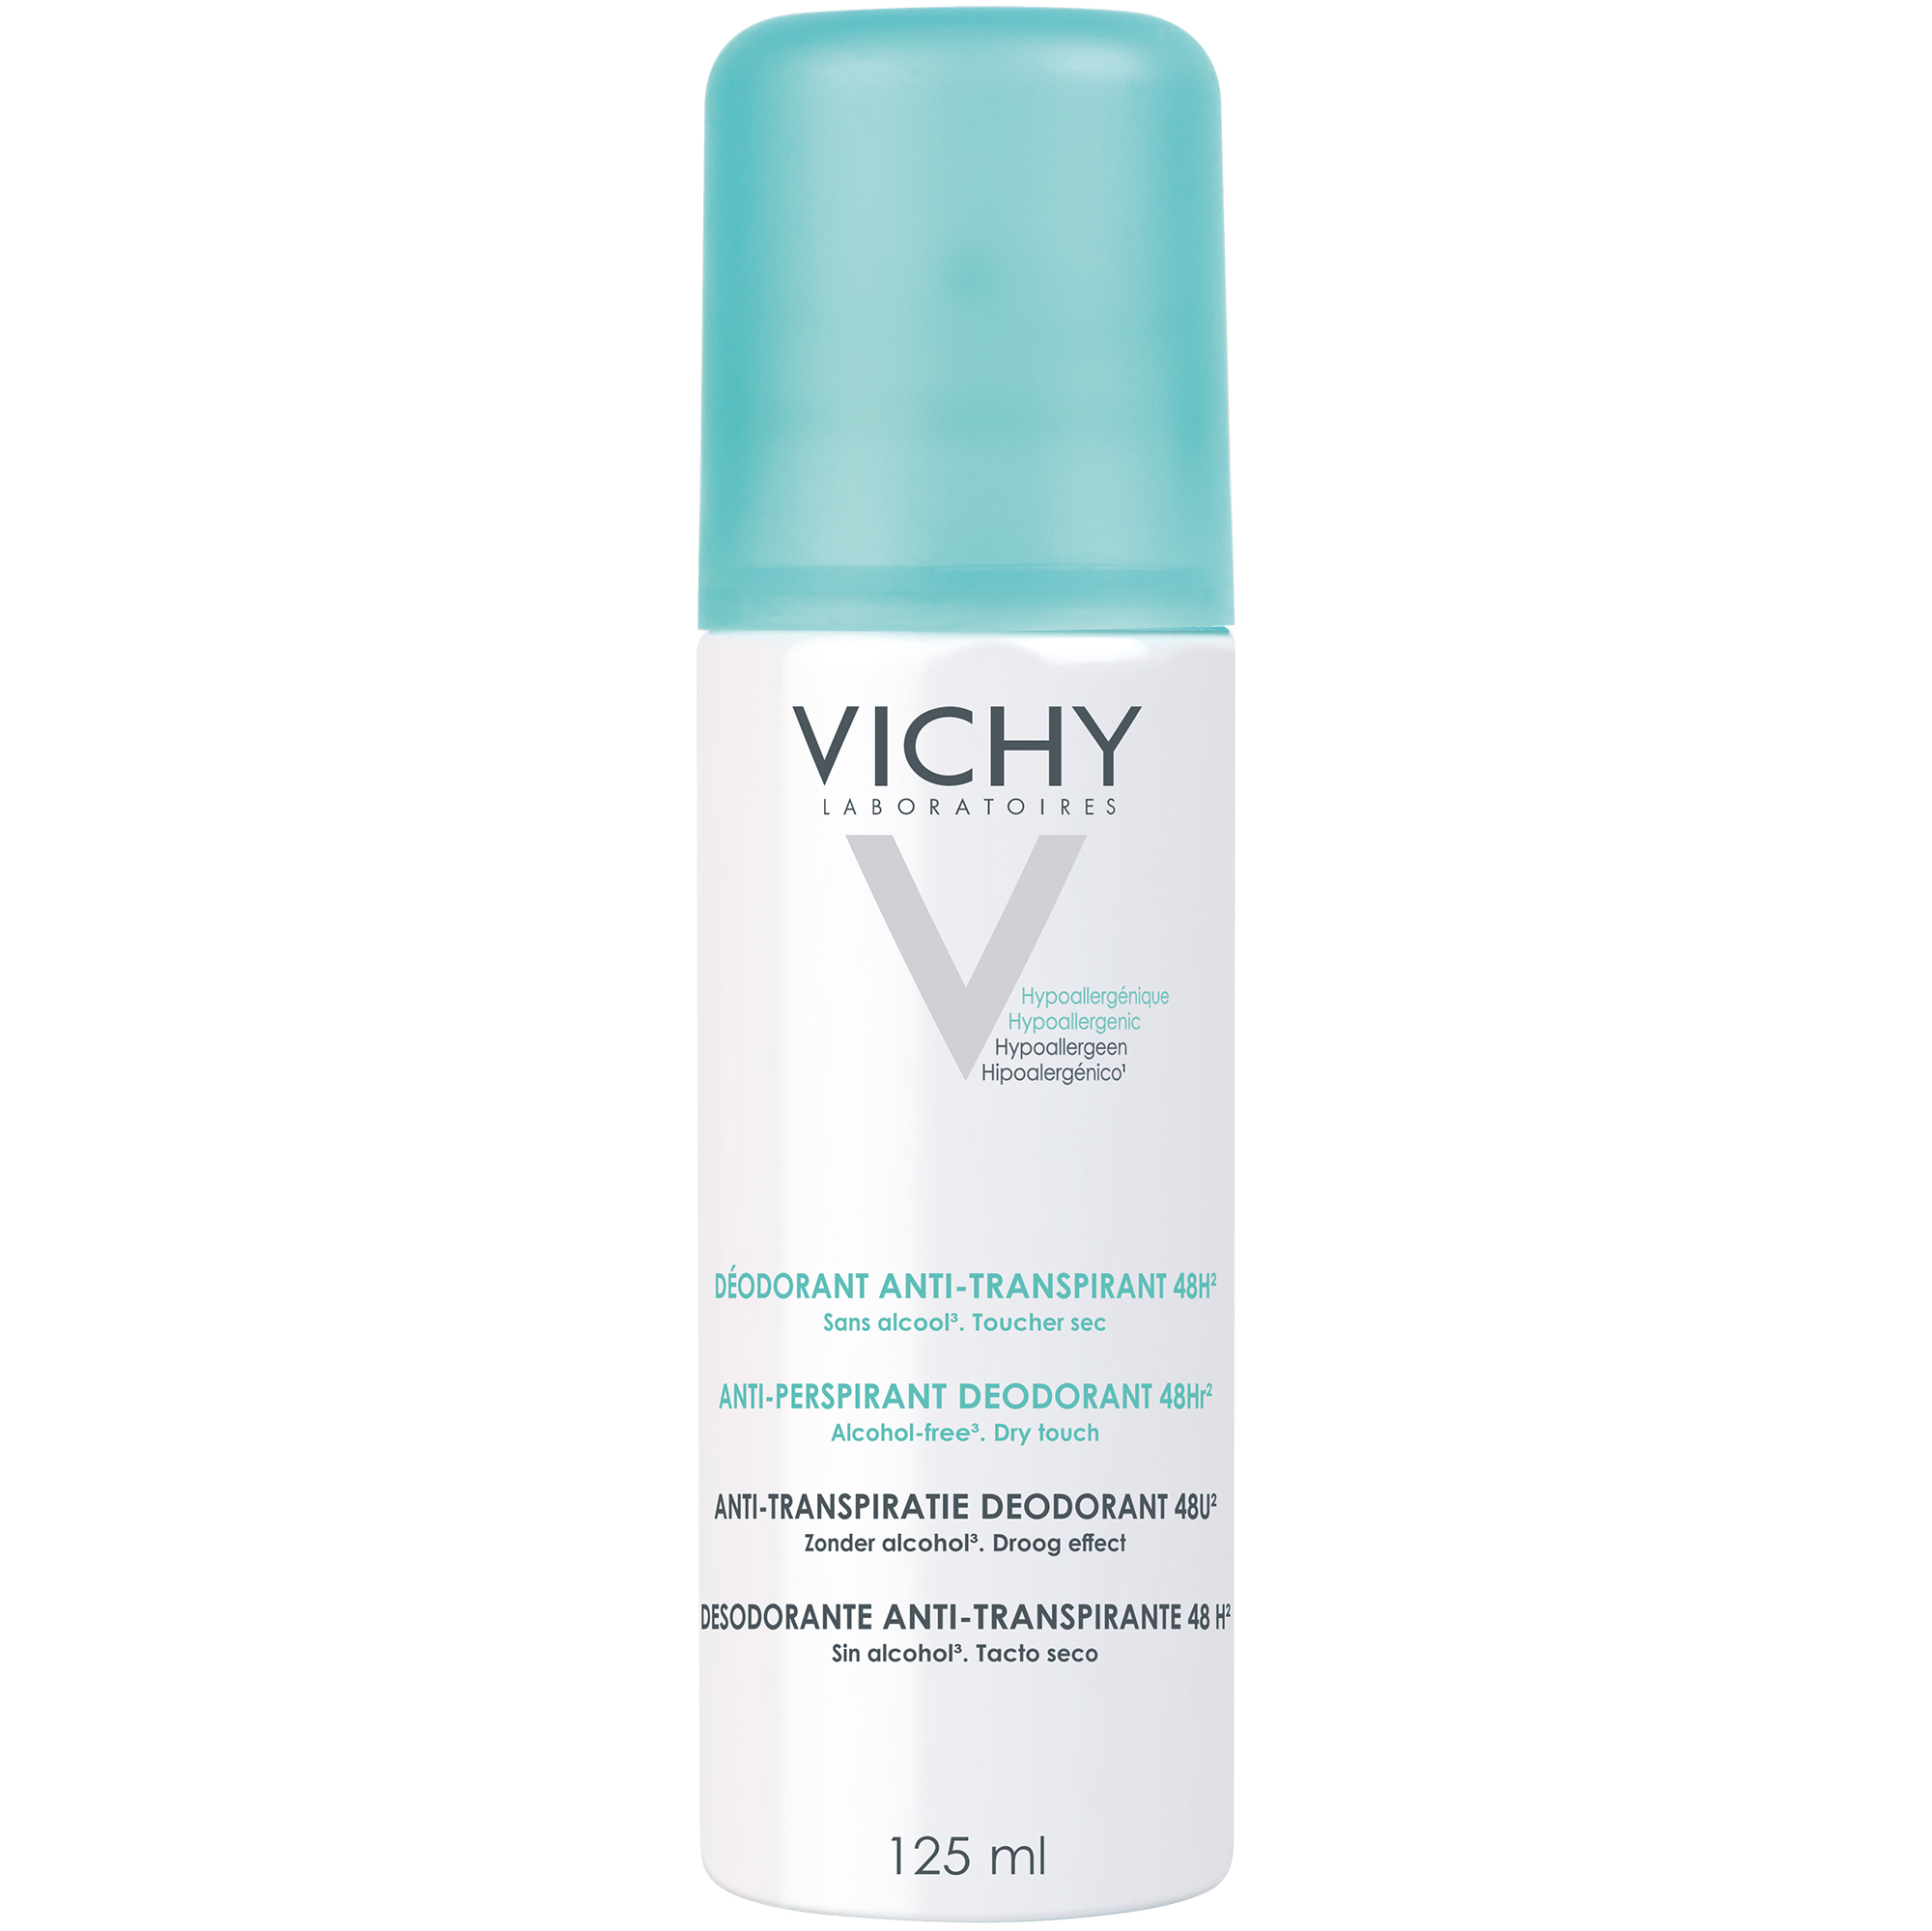 Déodorant anti-transpirant 48h Vichy - spray de 125 ml